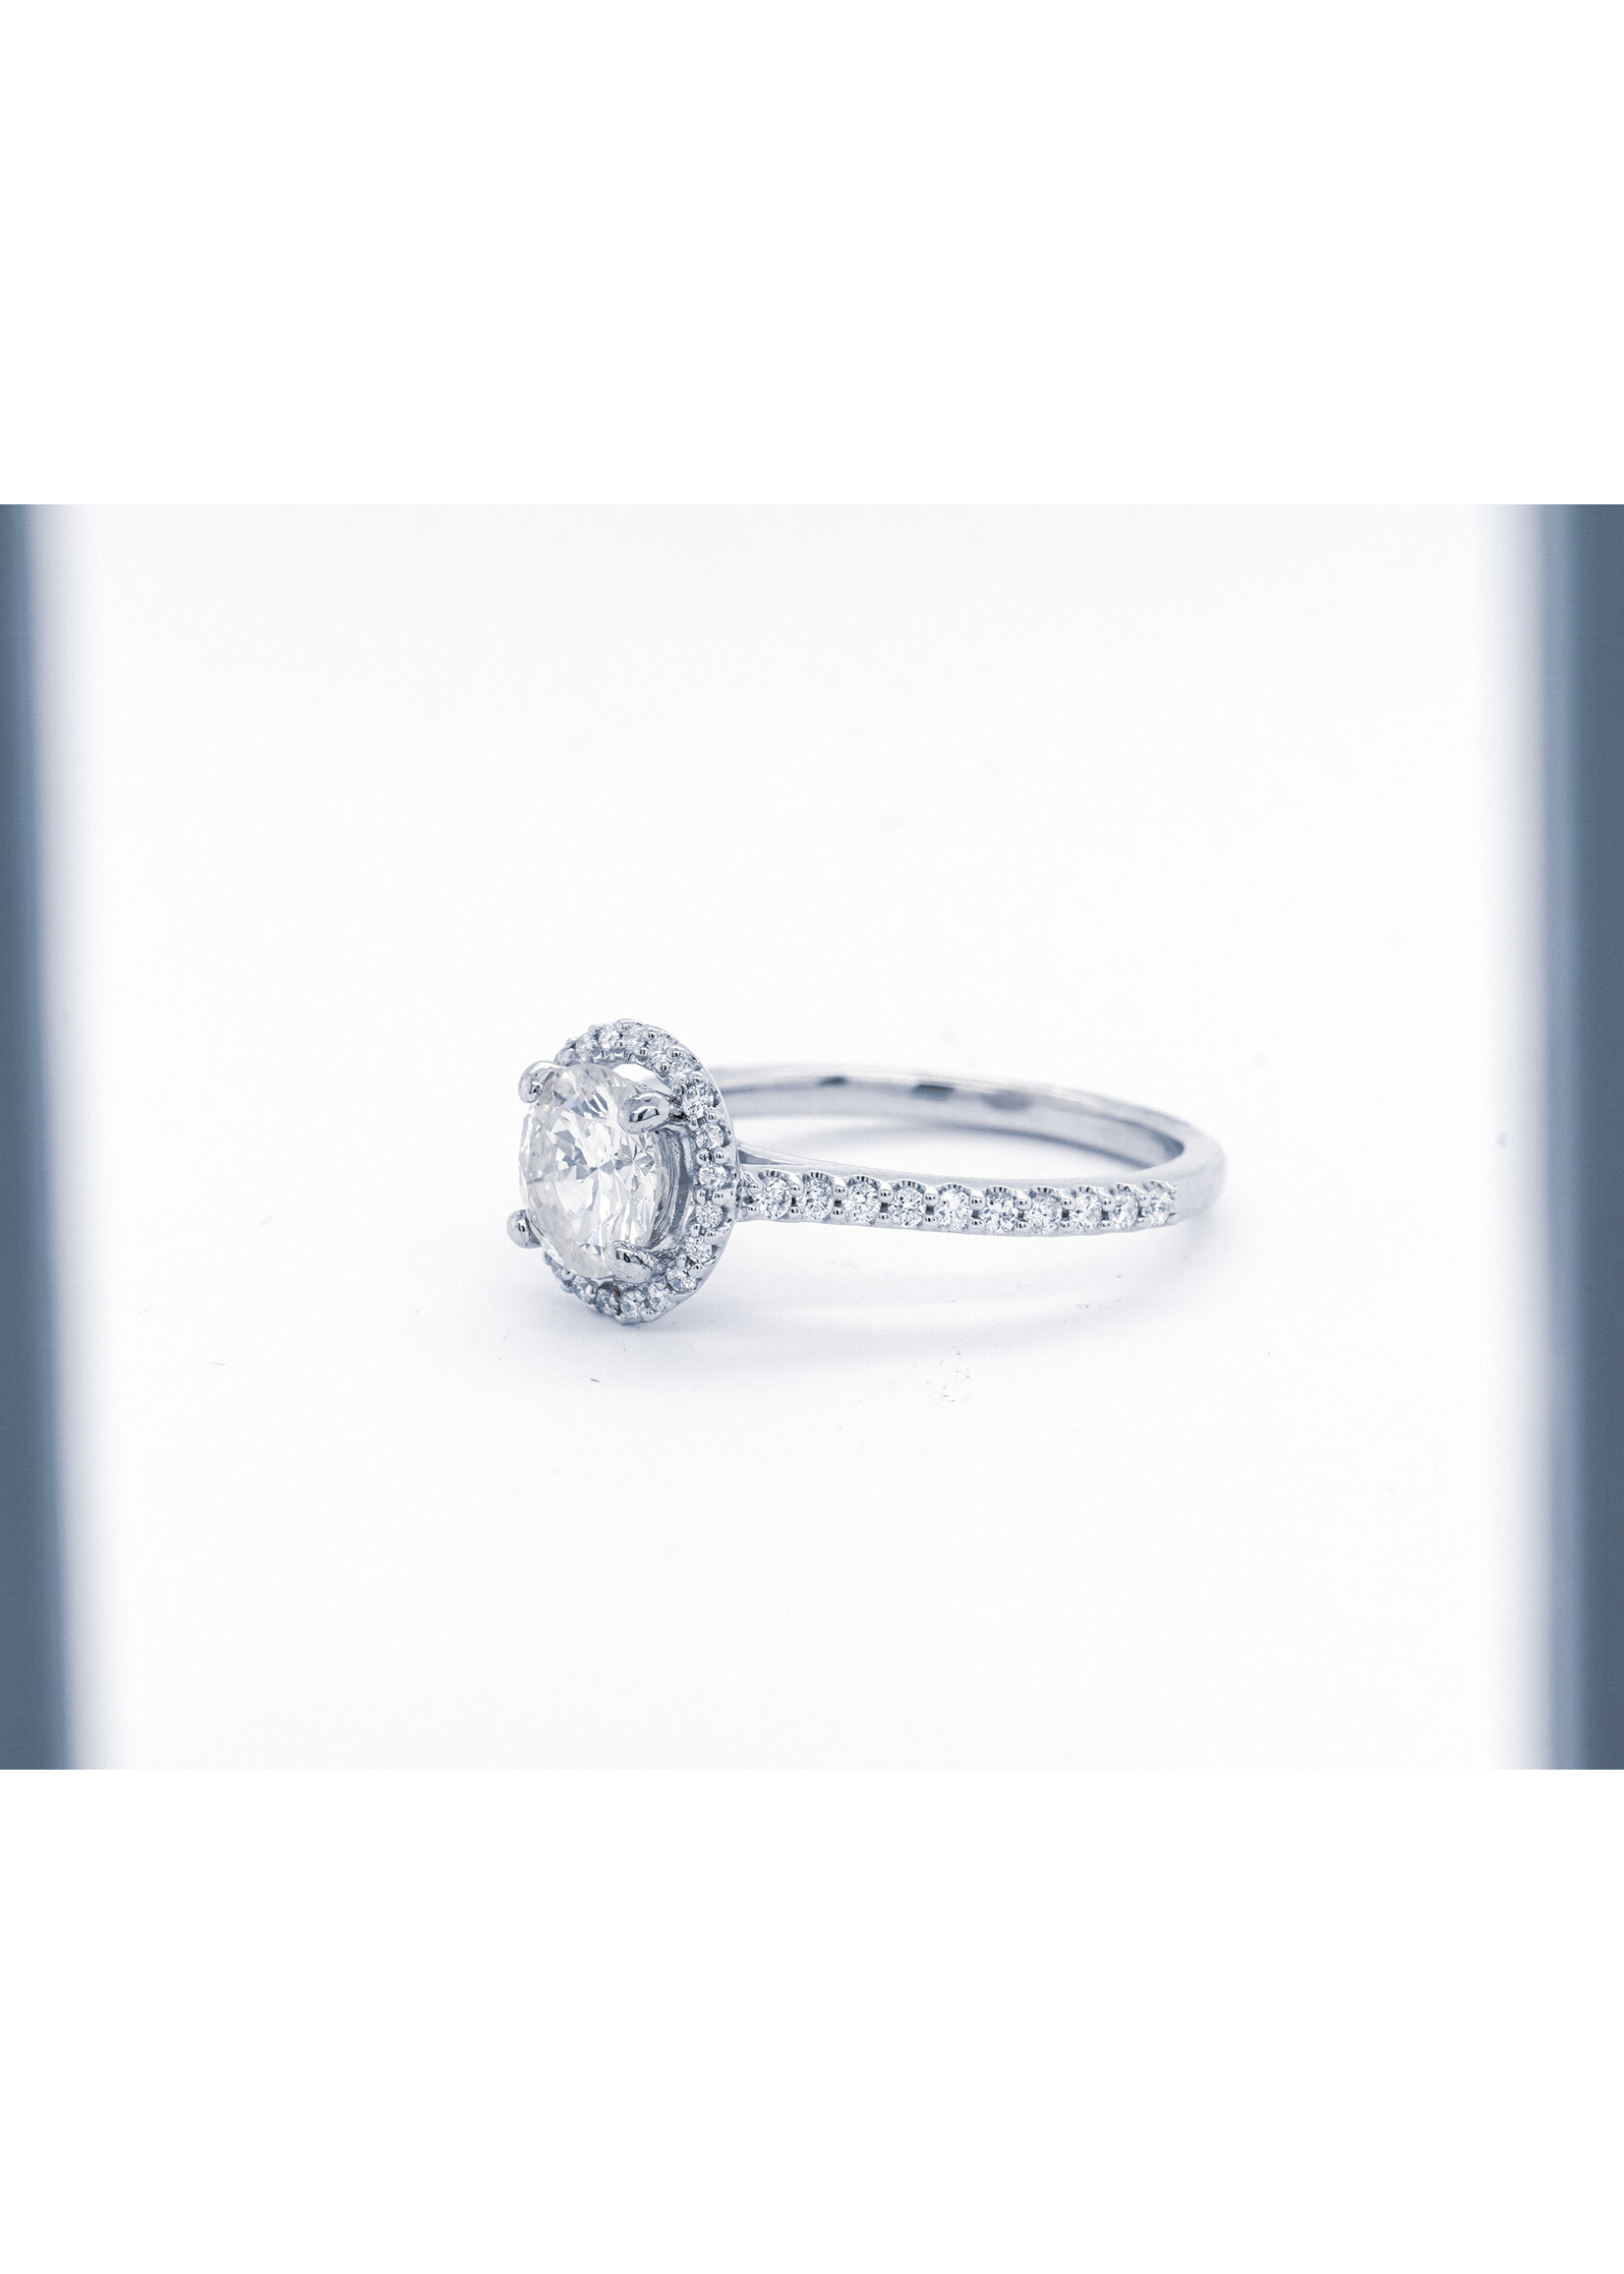 14KW 3.9g 1.71ctw (1.23ctr) JK/I1 Round Diamond Halo Engagement Ring (size 7)